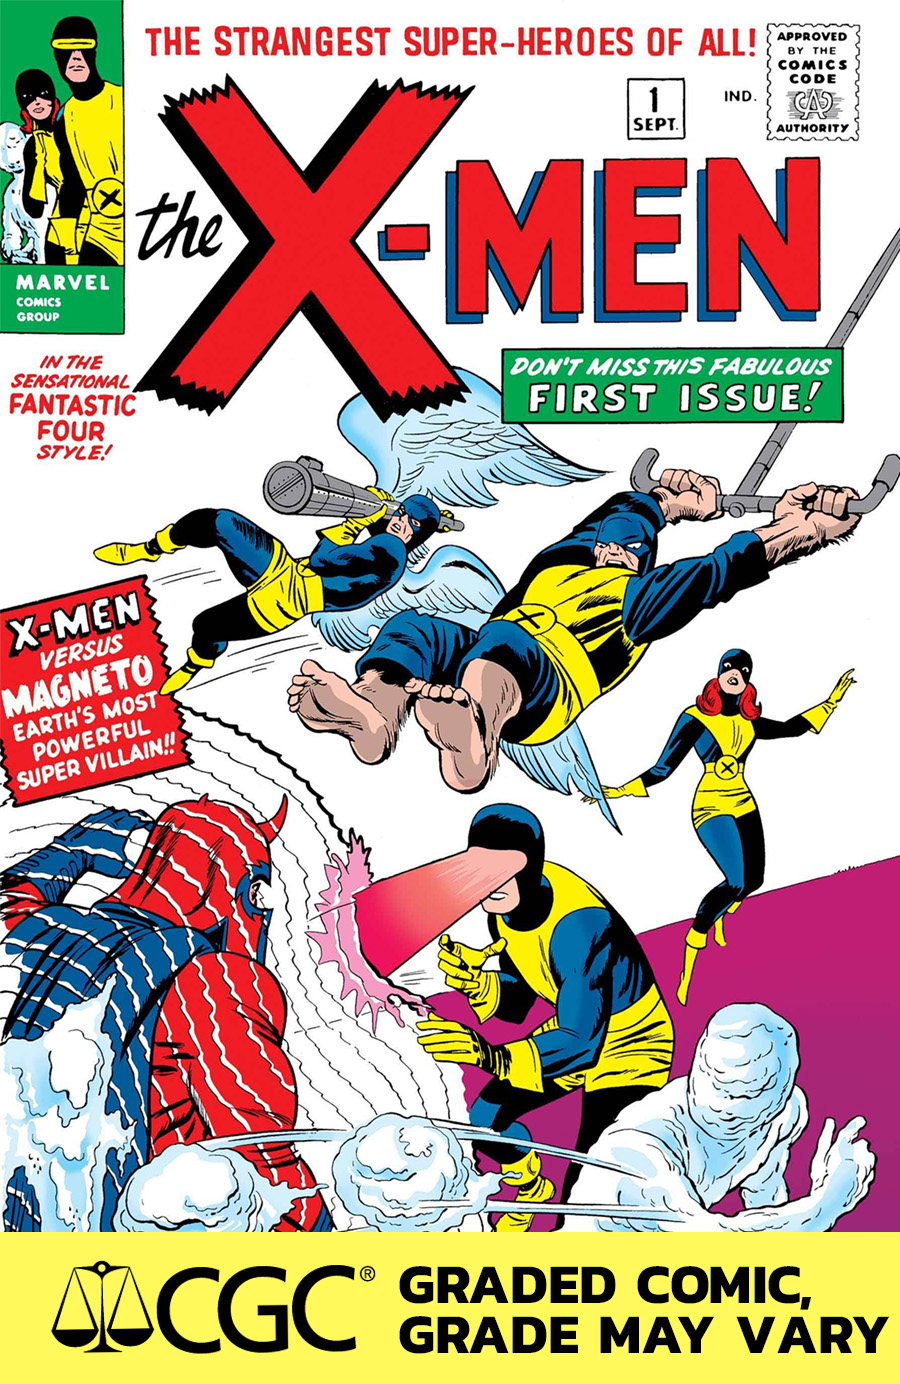 X-Men Vol 1 #1 Cover D Facsimile Edition New Printing DF CGC Graded